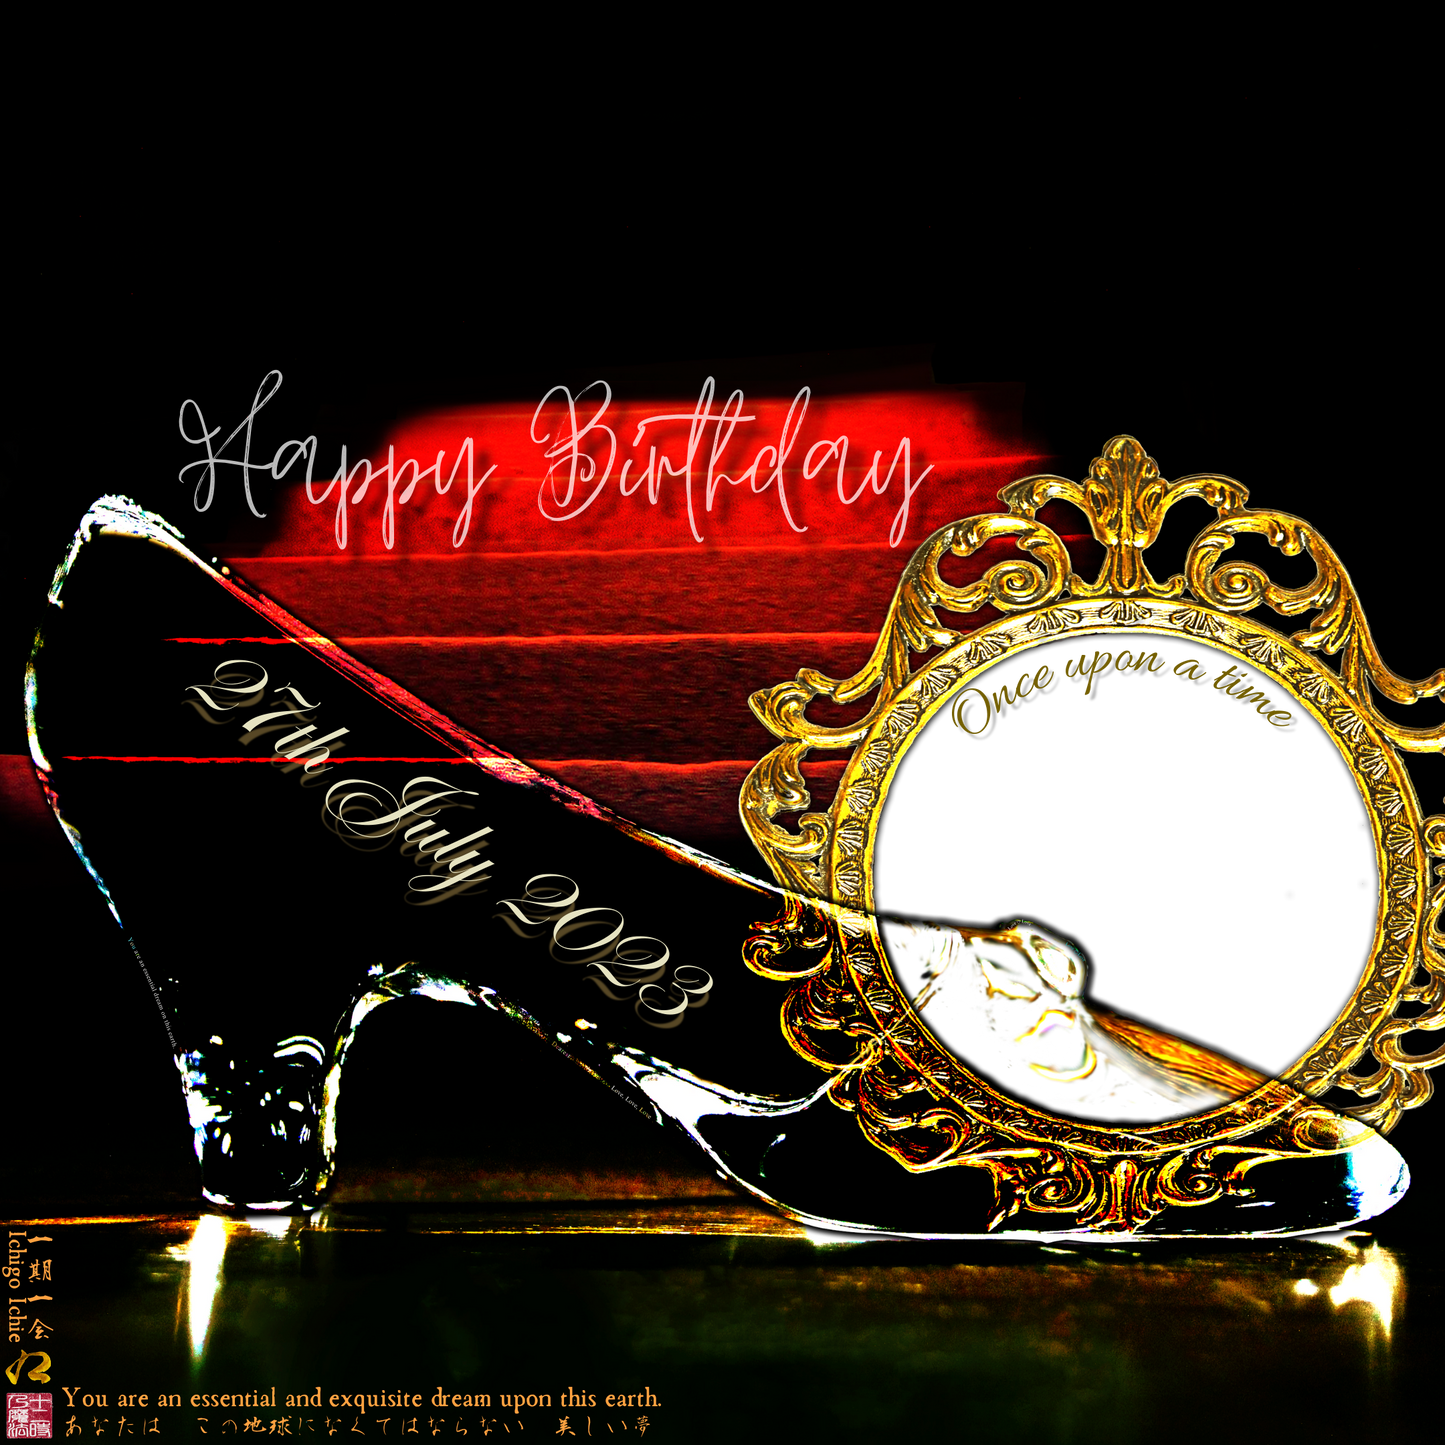 Happy Birthday Glass Slipper "Ichigo Ichie" 27th July 2023 the Right (1-of-1) NFT Art